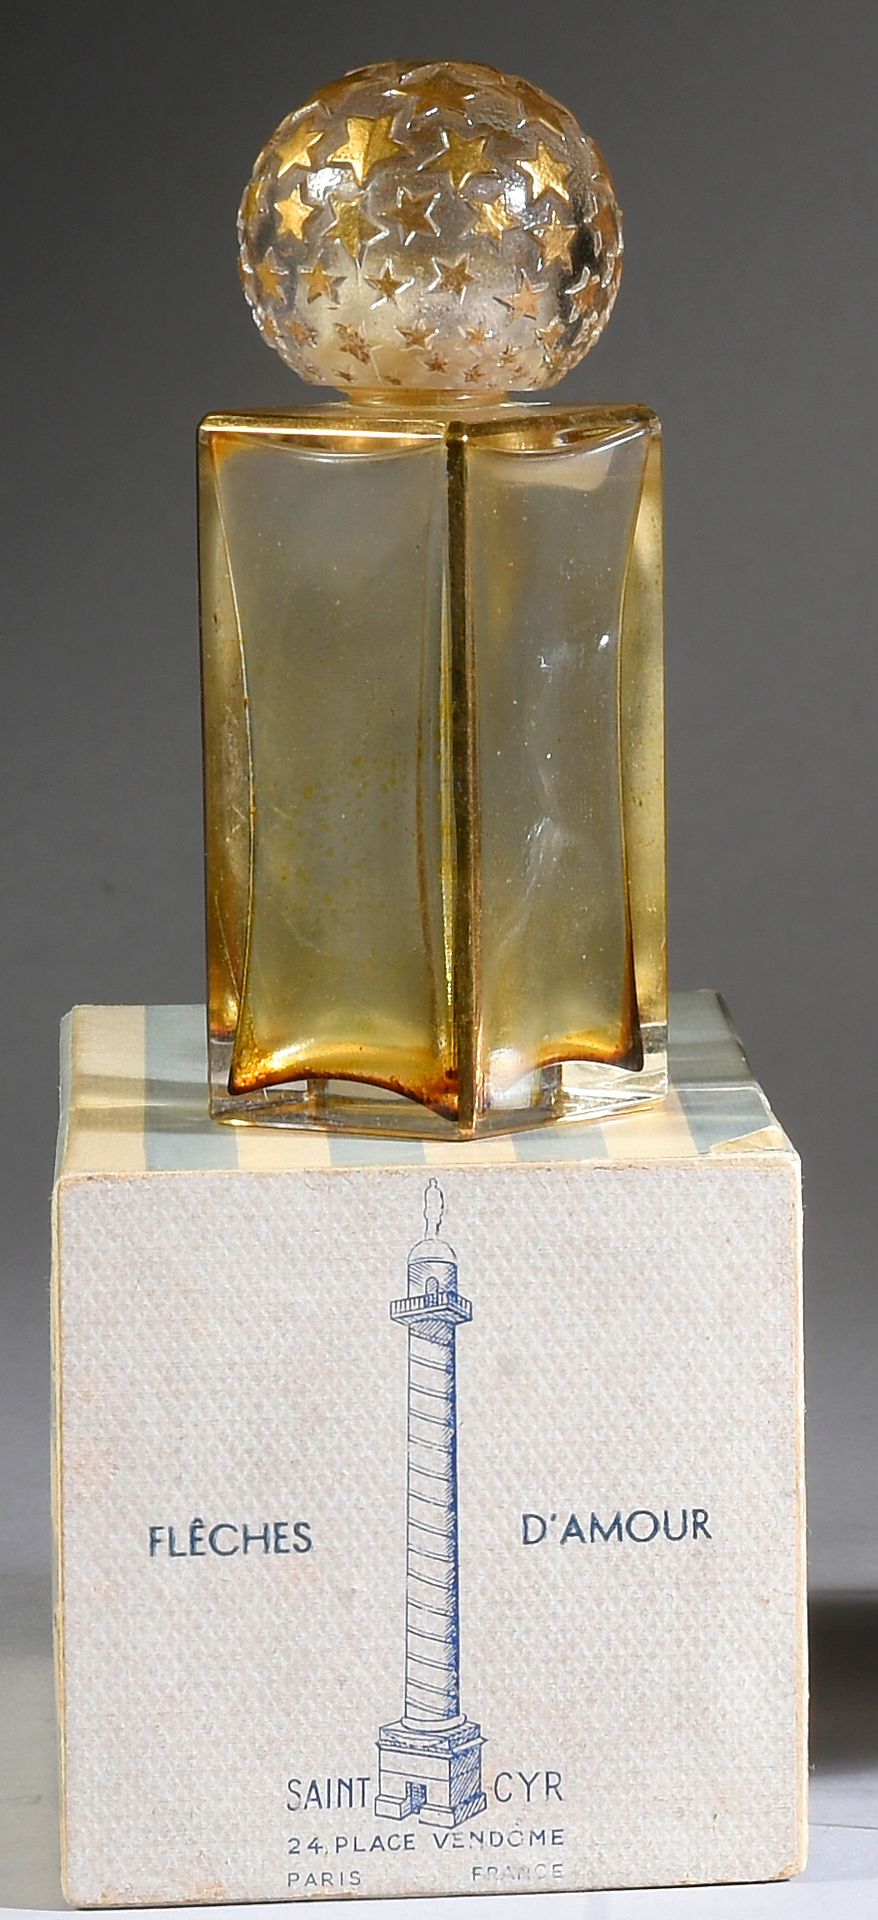 Claude Saint Cyr - «Flèches d'Amour» - (1945) 
无色的玻璃瓶被压成立方体柱状，上面涂有金漆，盖子是球形玻璃，上面有&hellip;